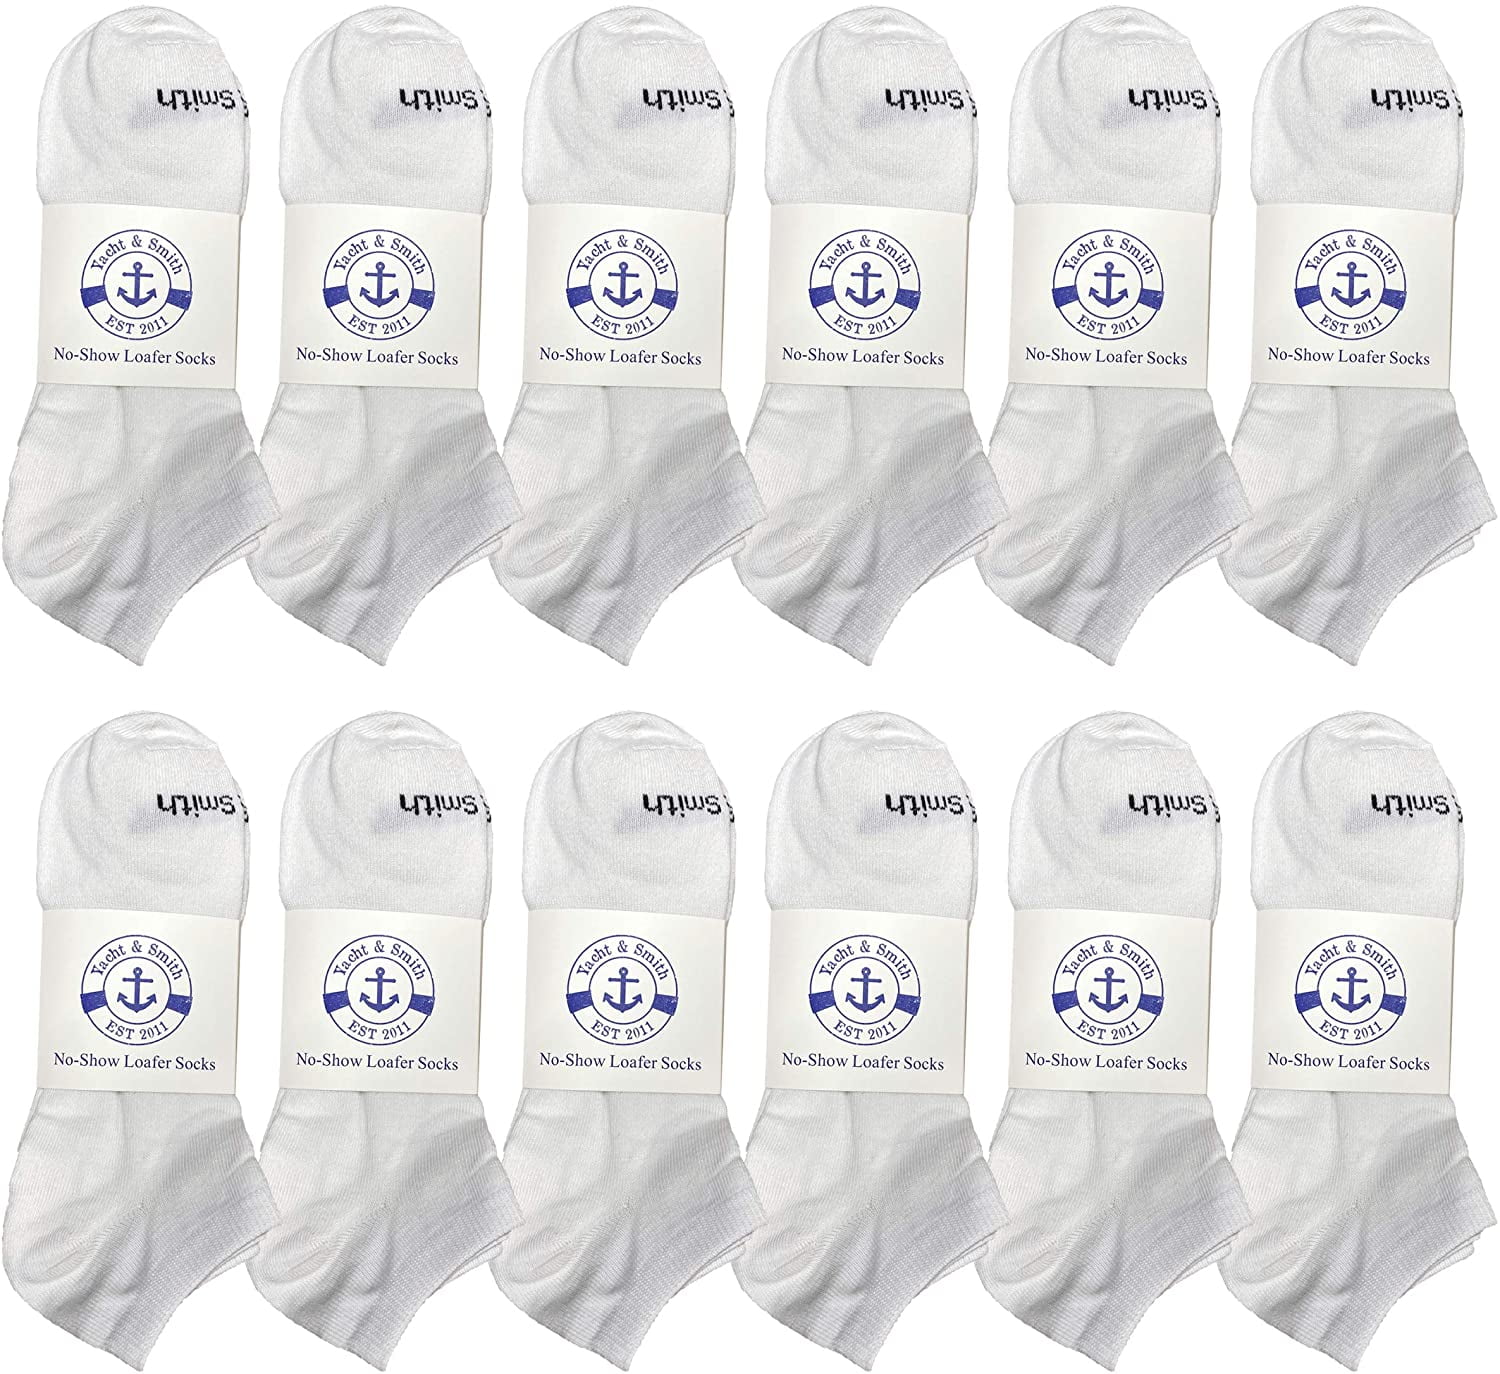 Wholesale Lot Men's White W/Blue Sports Cotton Ankle Low cut Socks 9-11 10-13 